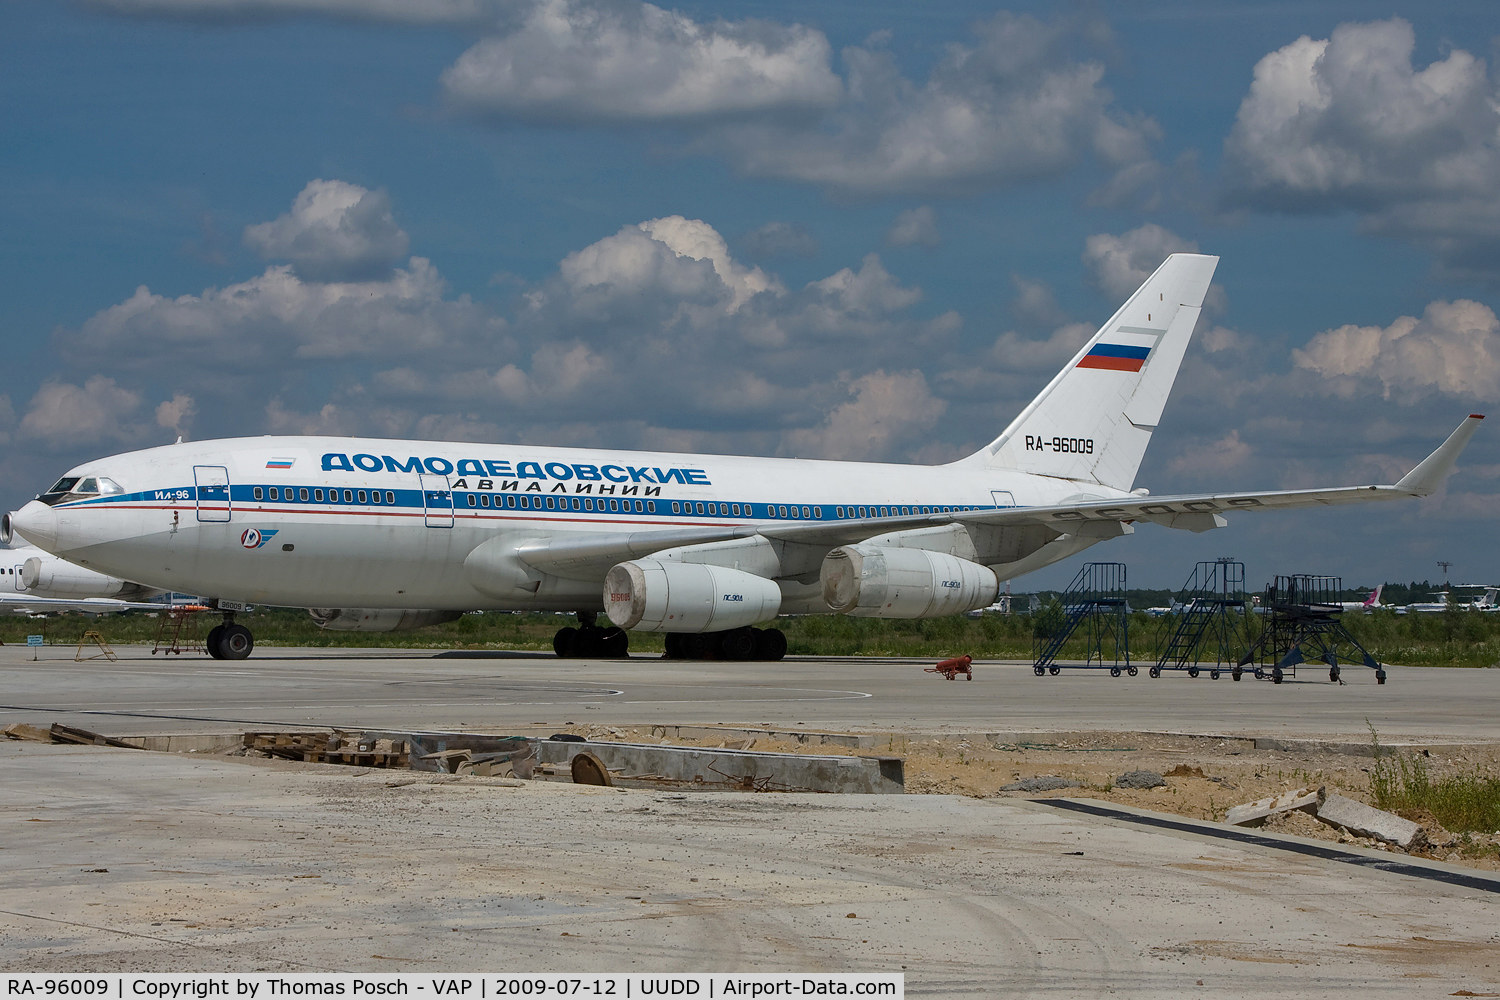 RA-96009, 1994 Ilyushin Il-96-300 C/N 74393201006, Domodedovo Airlines